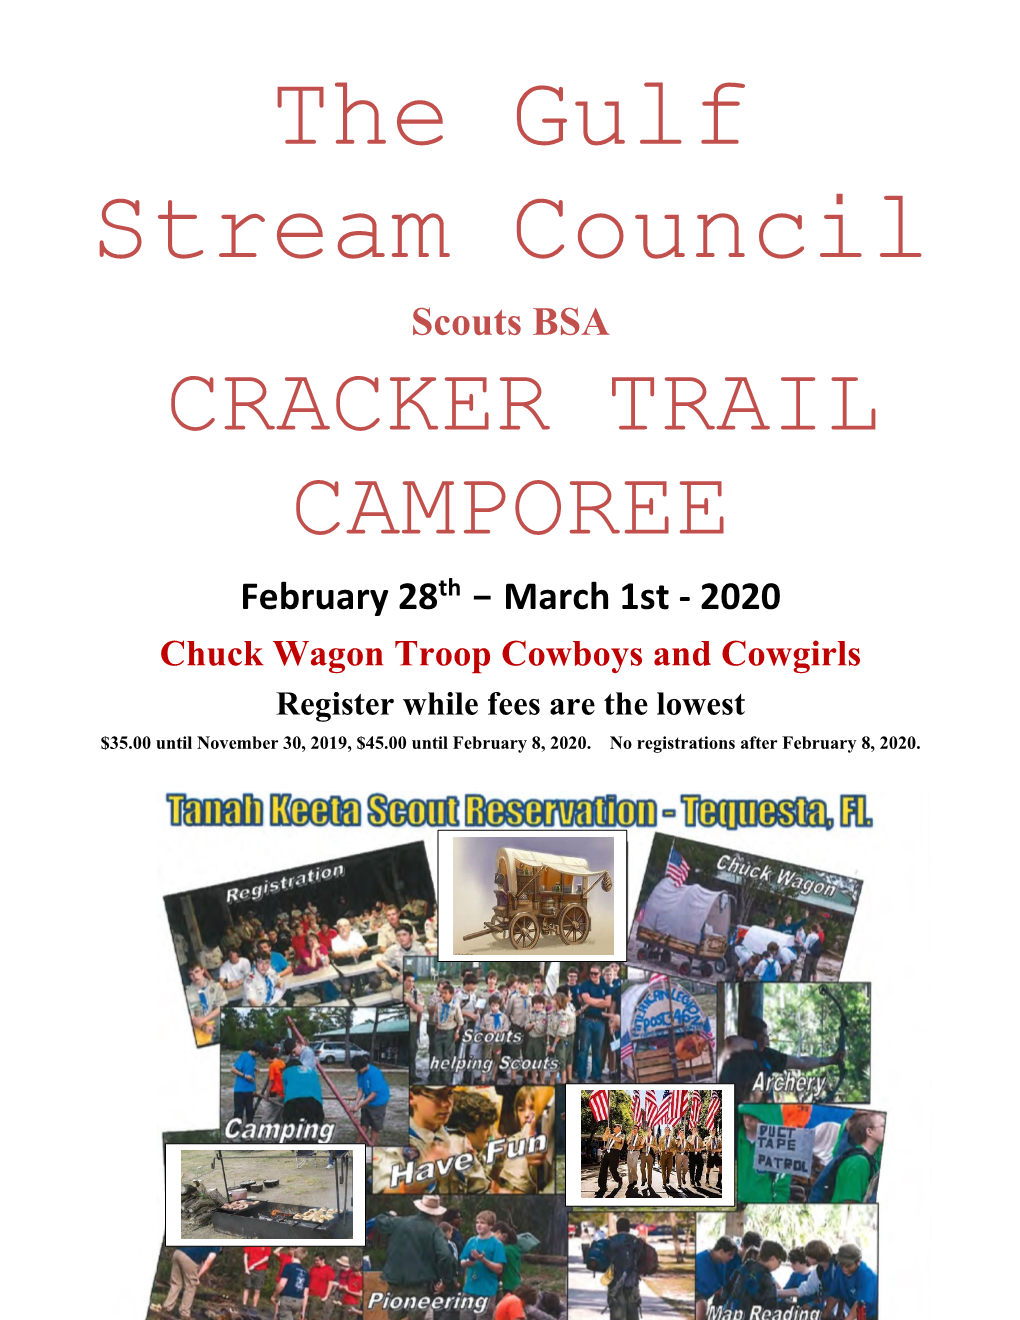 Cracker Trail Camporee